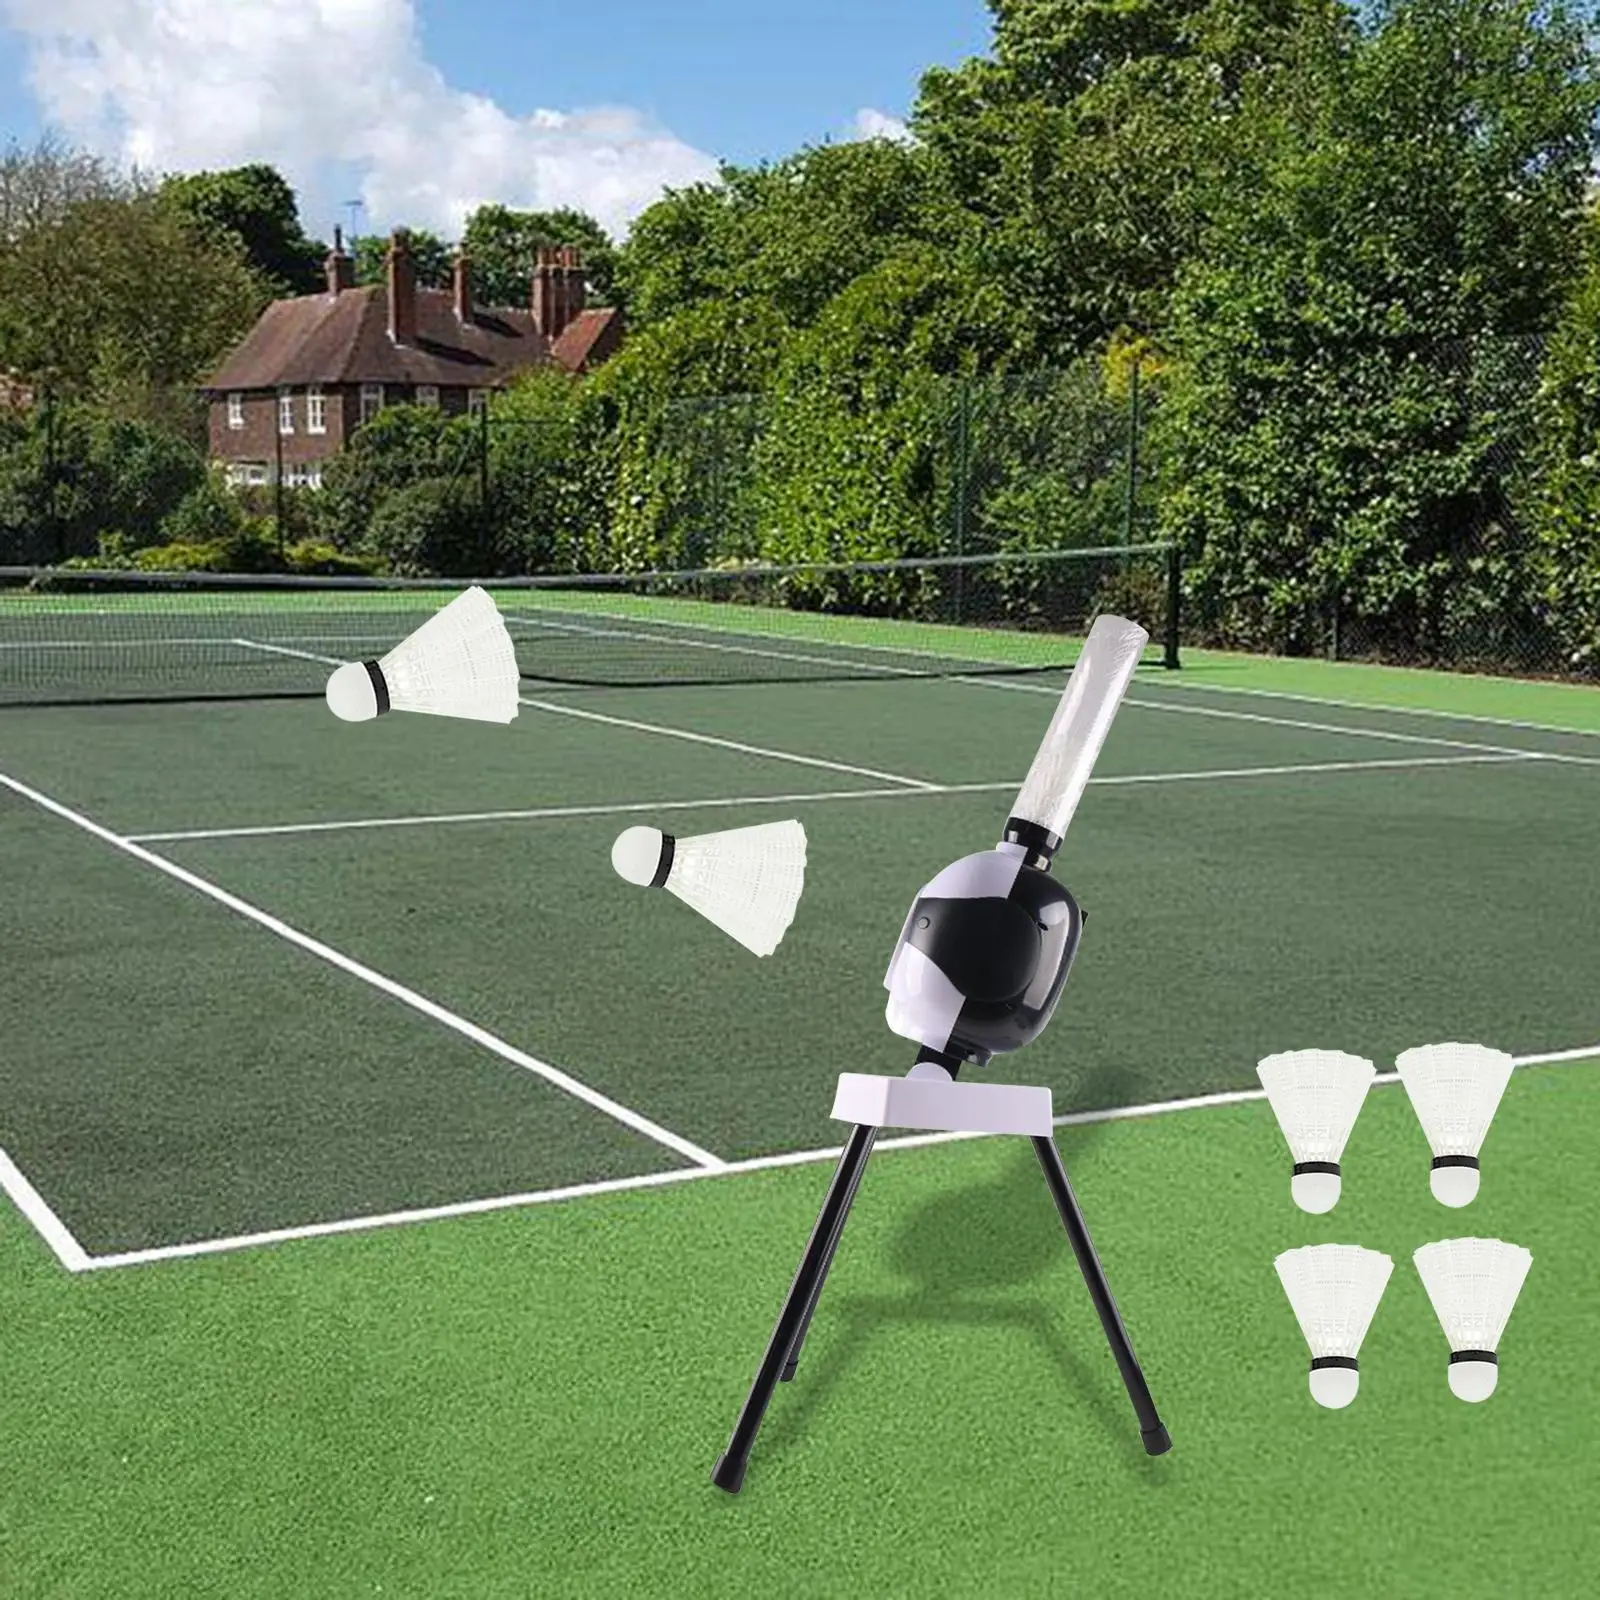 Automatic Badminton Serve Machine Practice Professional Portable Sports Training Electric Badminton Launcher for Kids All Levels